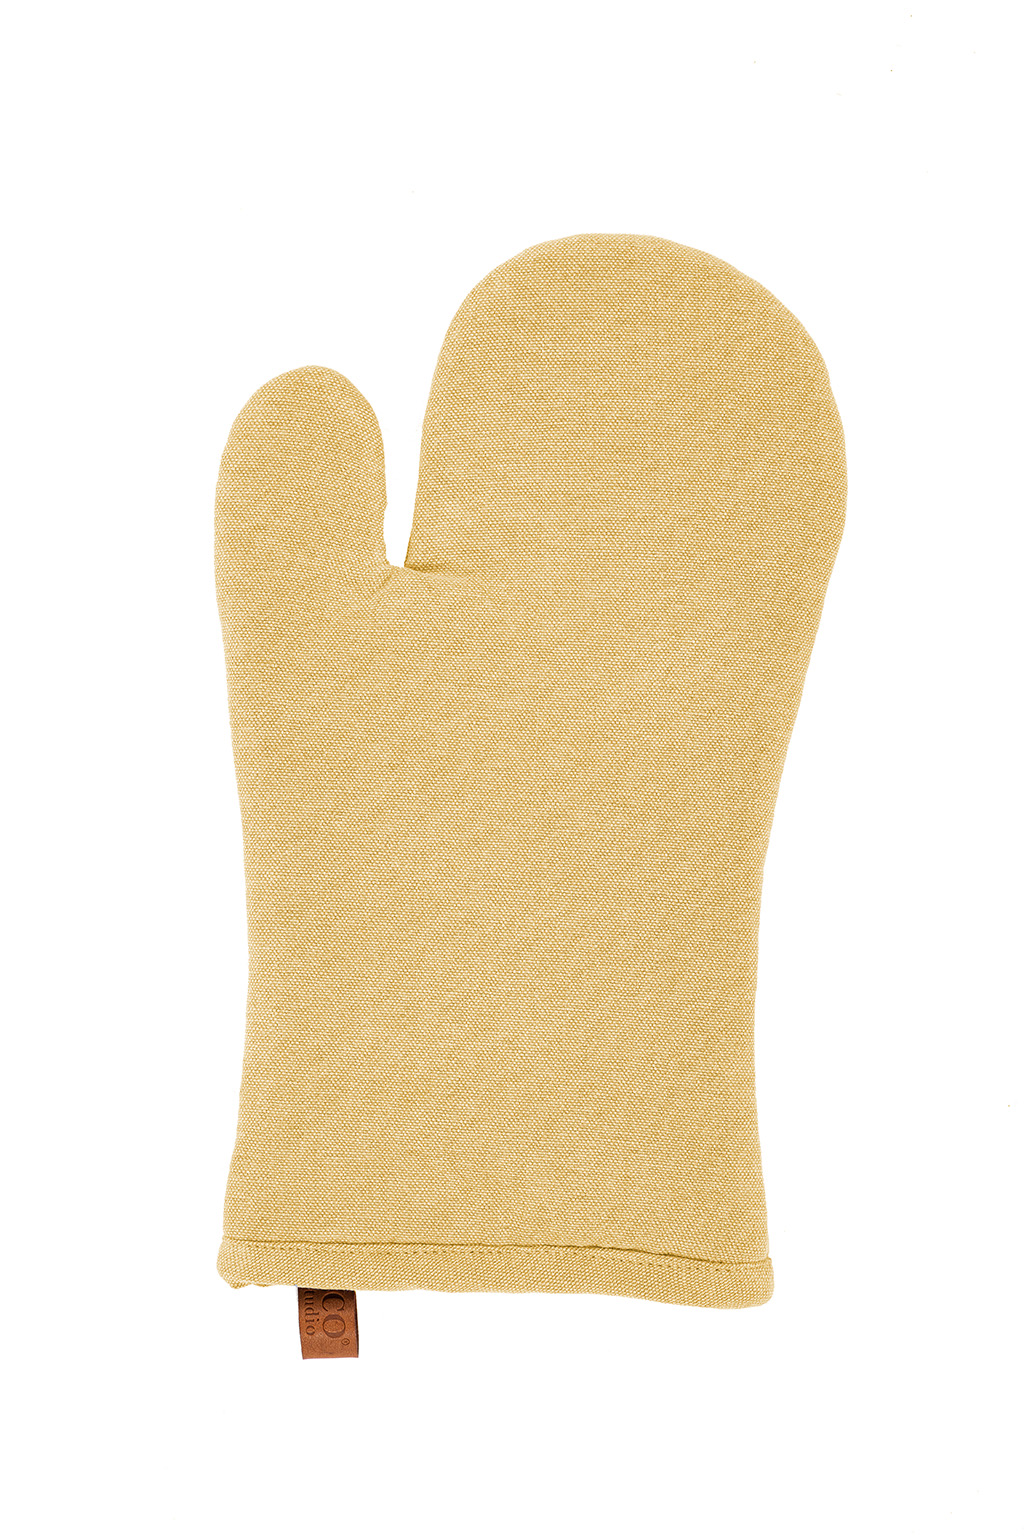 Glove HAVANA 18x32cm, ochre yellow